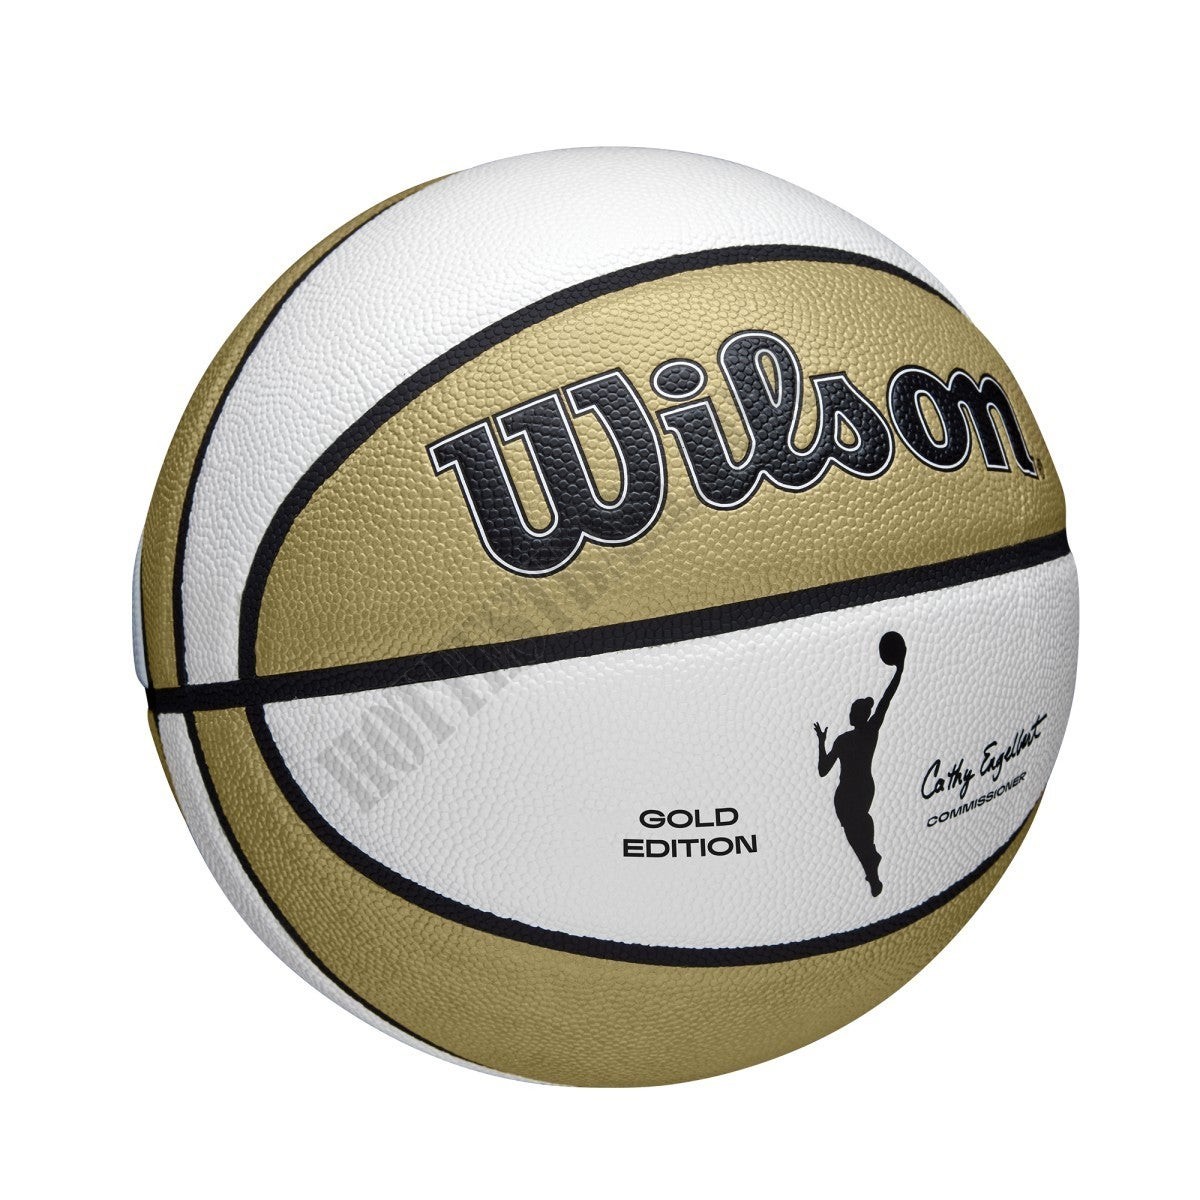 WNBA Gold Edition Basketball - Wilson Discount Store - -1